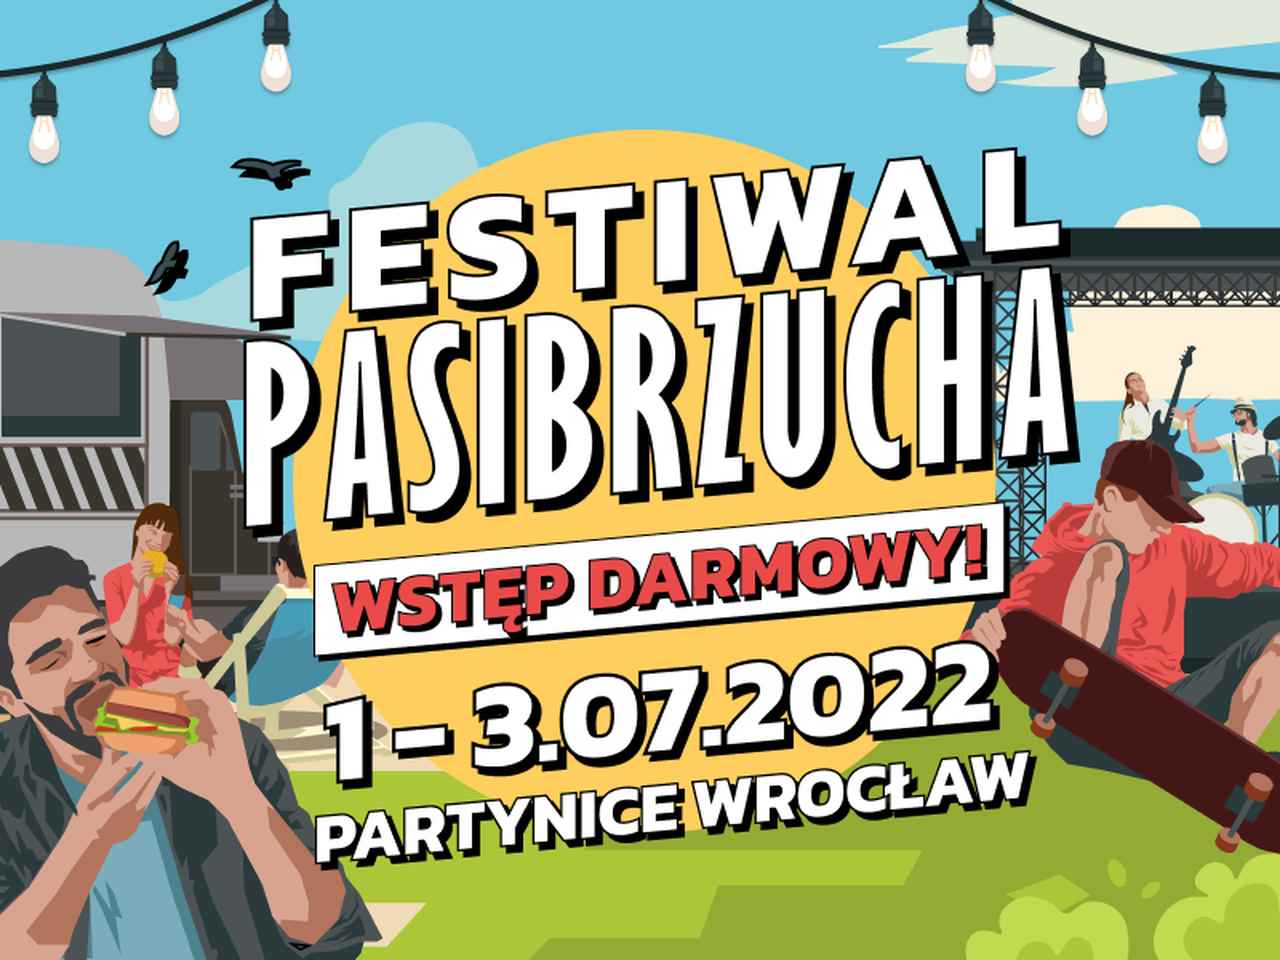 Pasibus te invita a la próxima edición del Festival Pasibrzucha